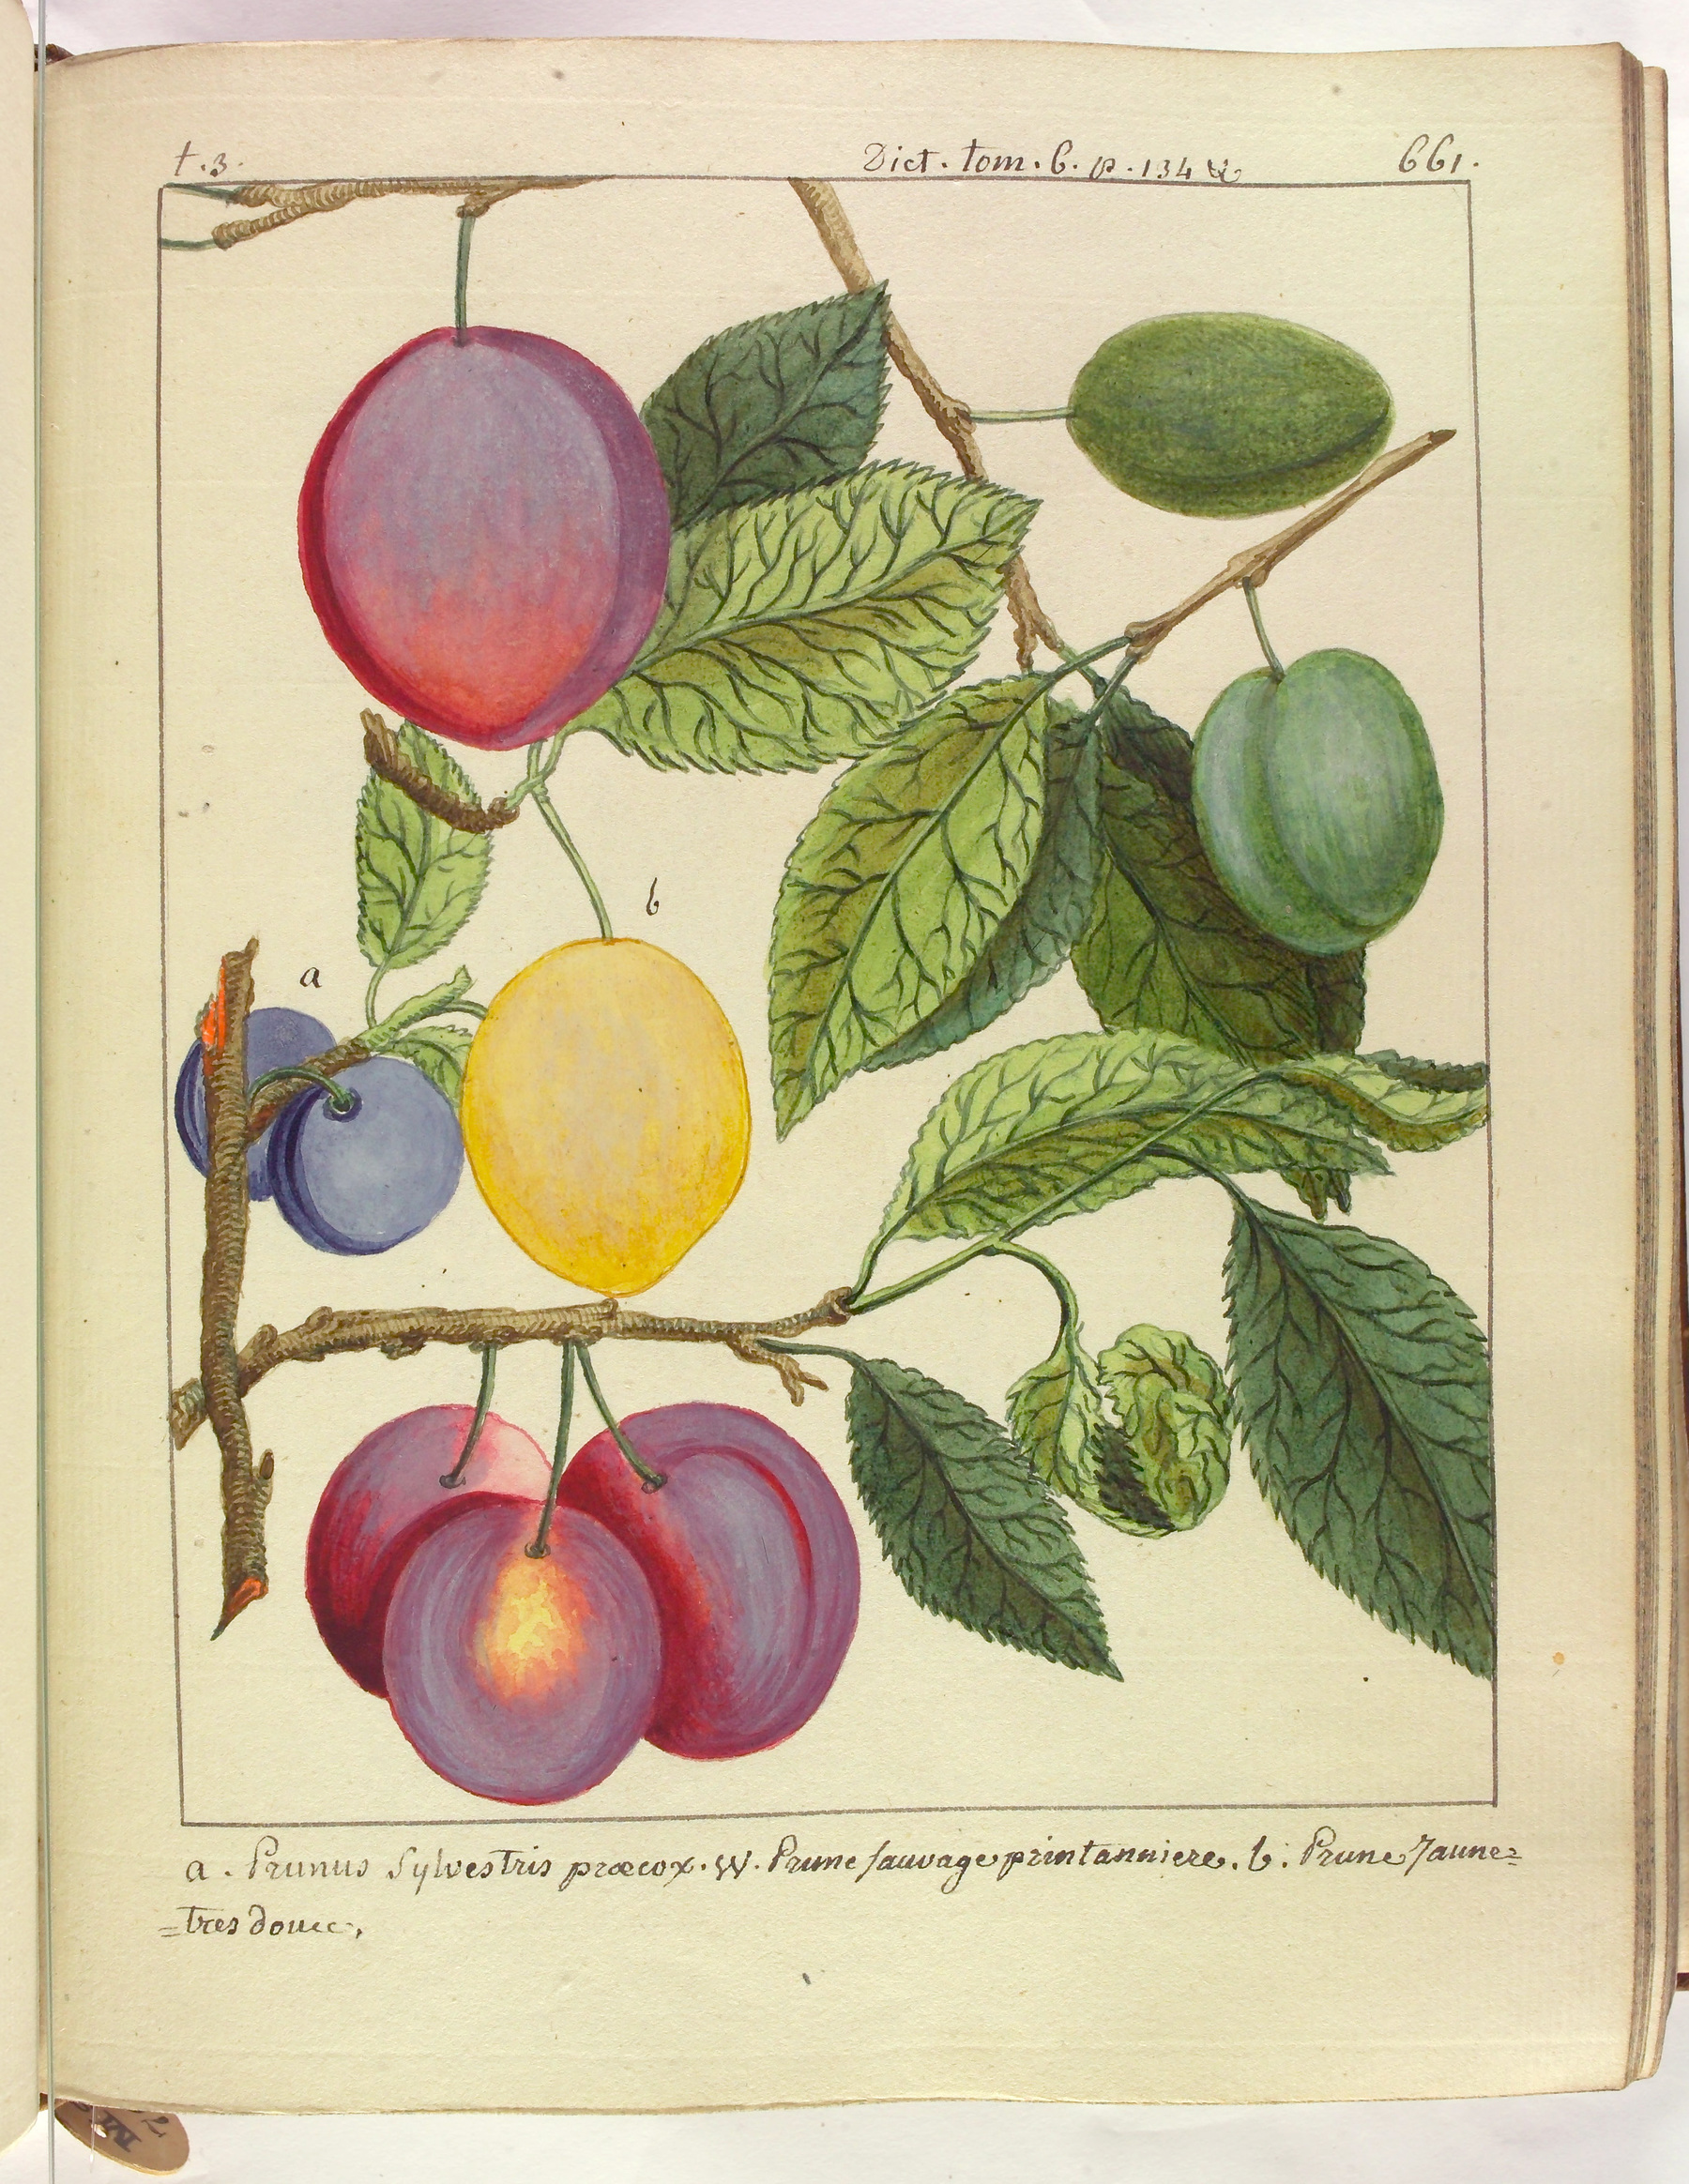 Contenu du Prune sauvage printanière - Prune jaune